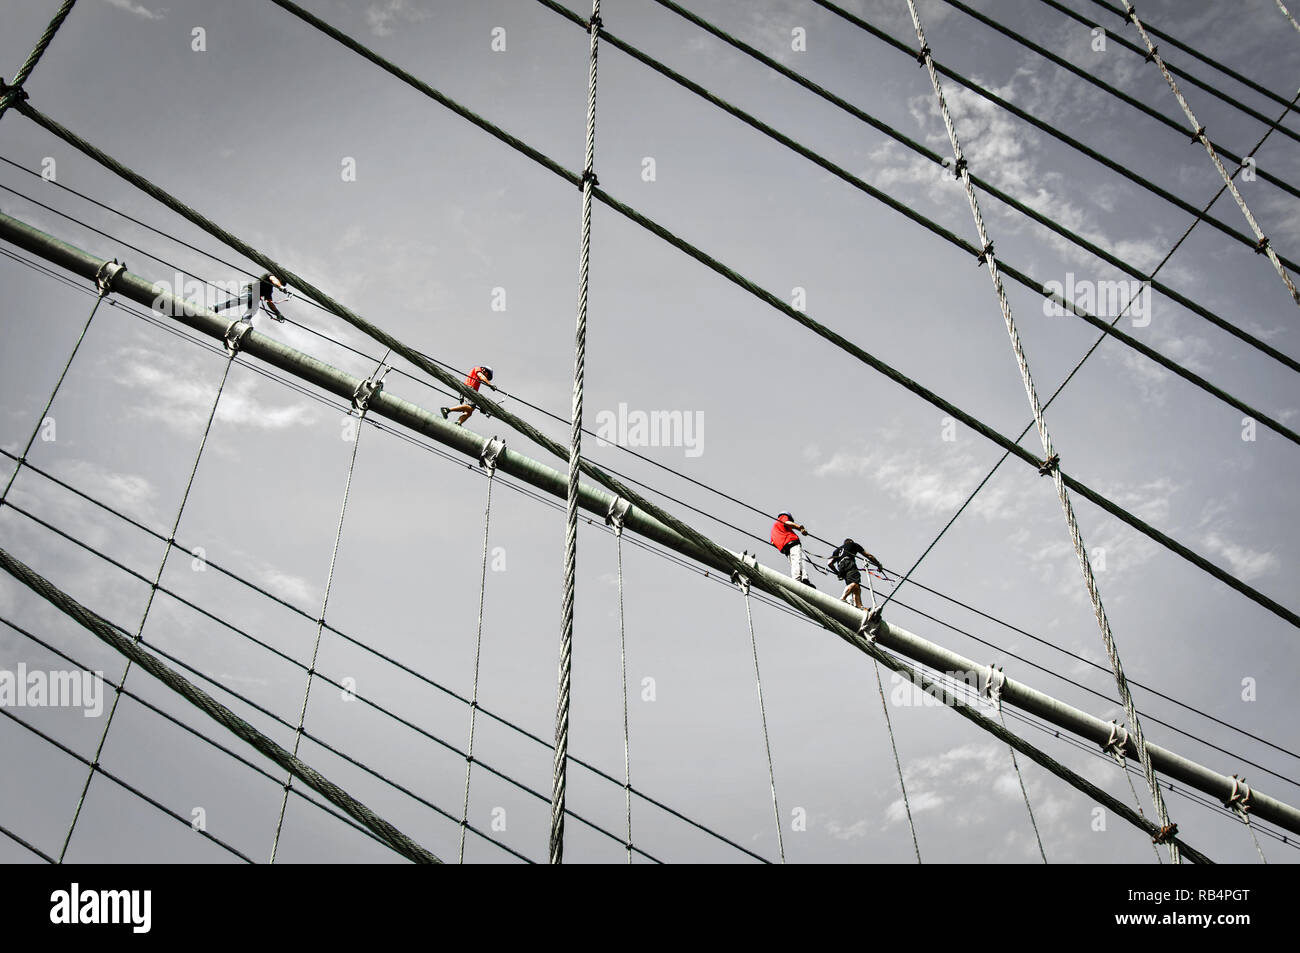 Climbers on the Brooklyn bridge cables, New York City, USA Stock Photo